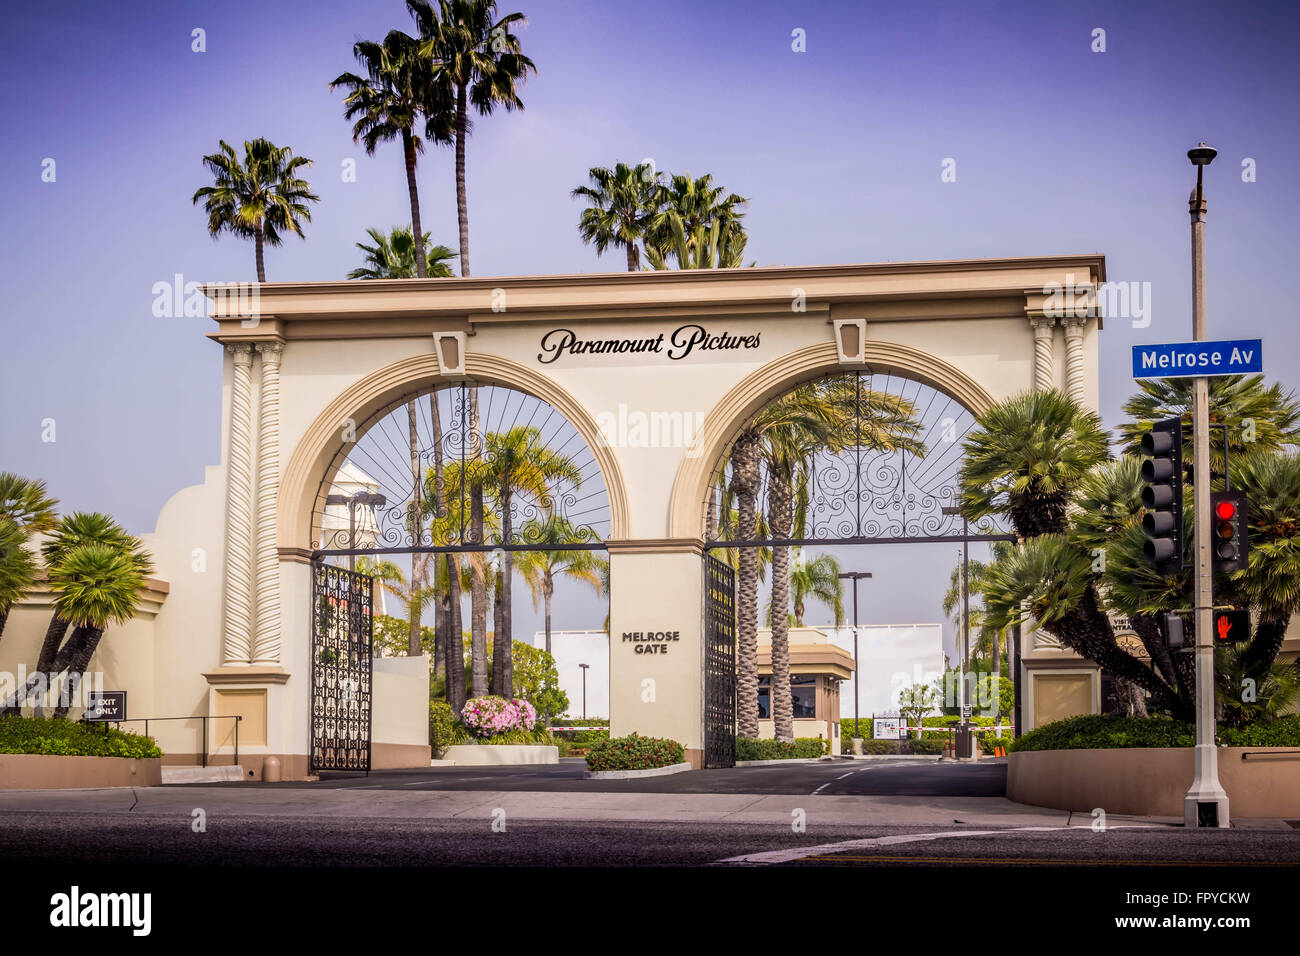 Paramount Pictures, Main Gate Banque D'Images